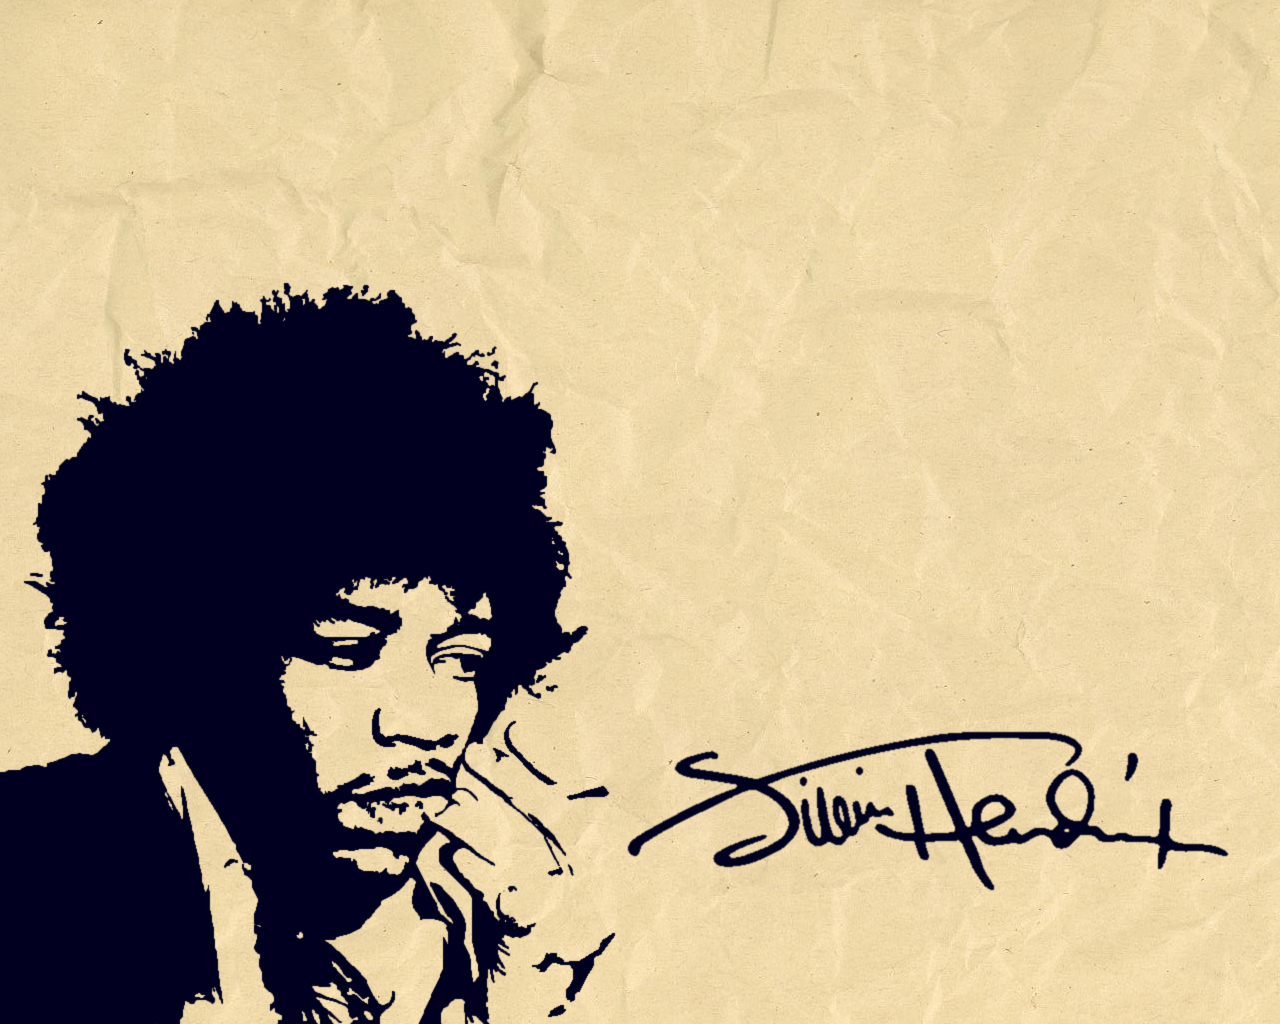 Free Download Jimi Hendrix Wallpaper Jimi Hendrix Wallpapers 1280x1024 For Your Desktop Mobile Tablet Explore 48 Jimi Hendrix Iphone Wallpaper Future Hendrix Wallpaper Jimi Hendrix Hd Wallpaper